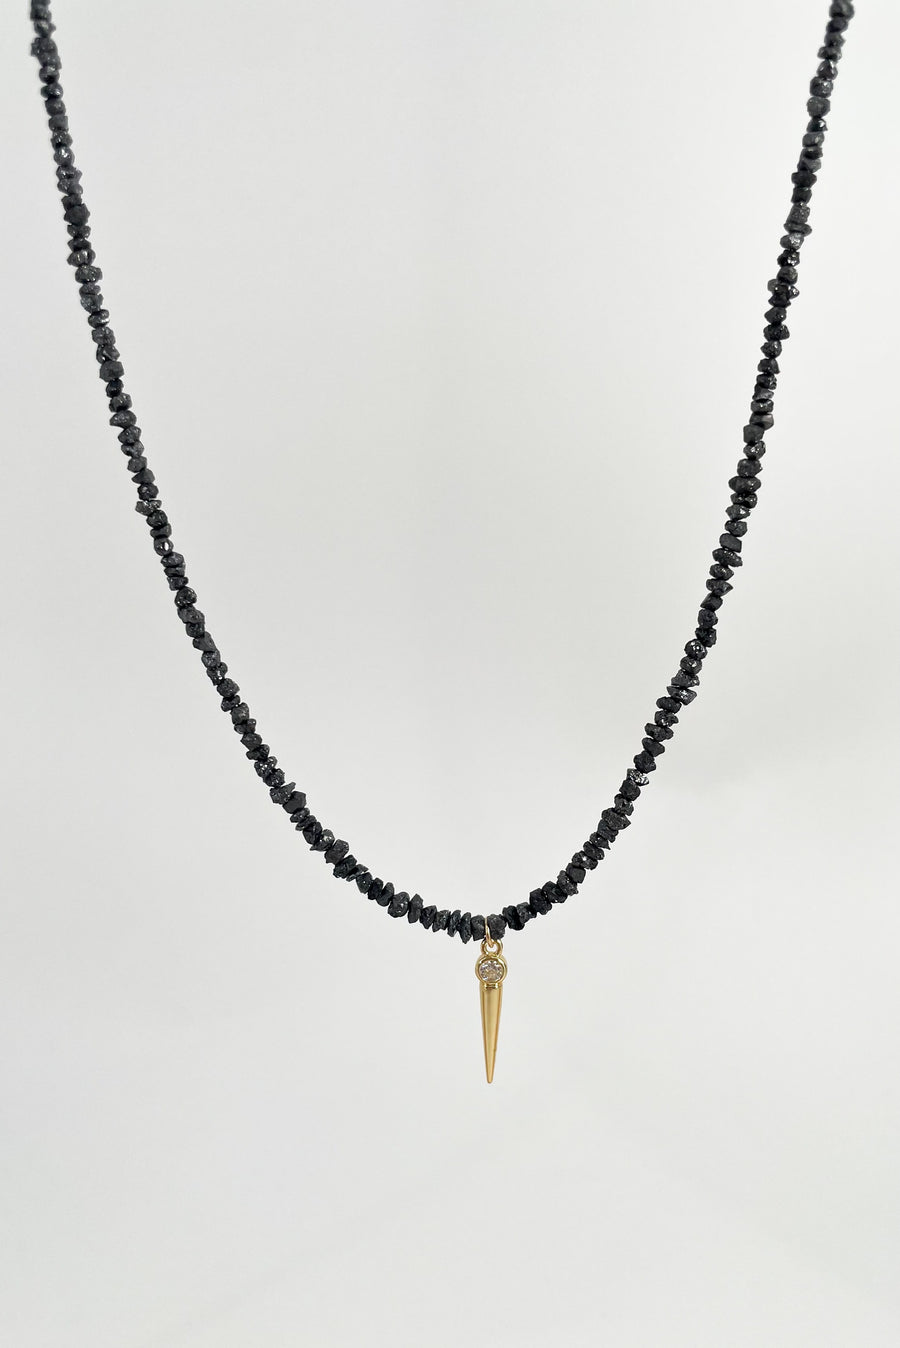 Black Diamond Noir Necklace